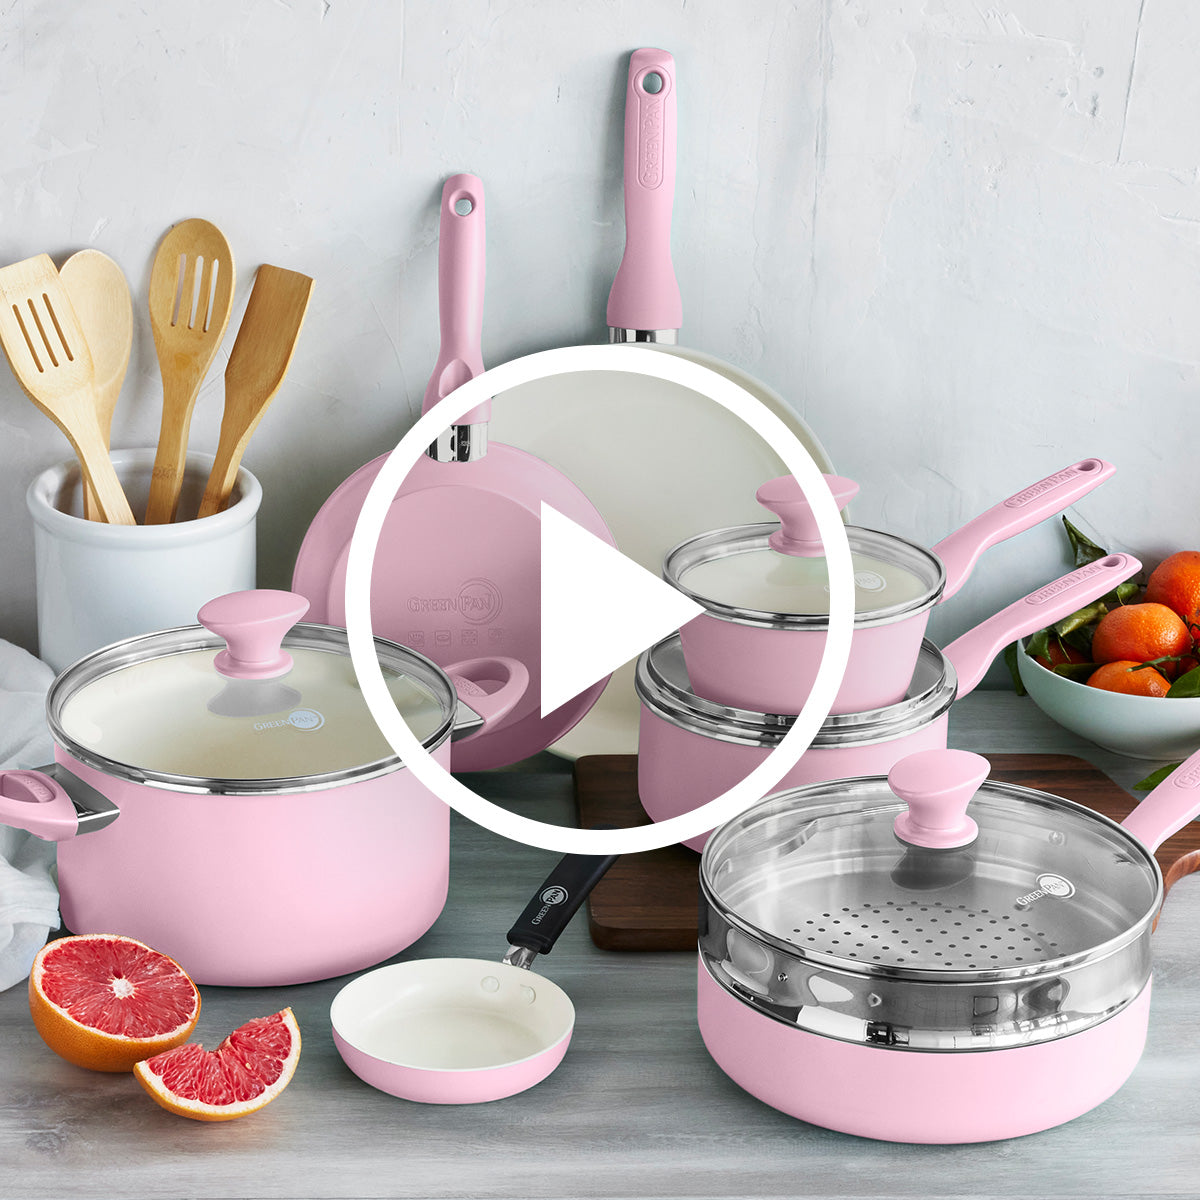 Rio Ceramic Nonstick 16-Piece Cookware Set, Pink